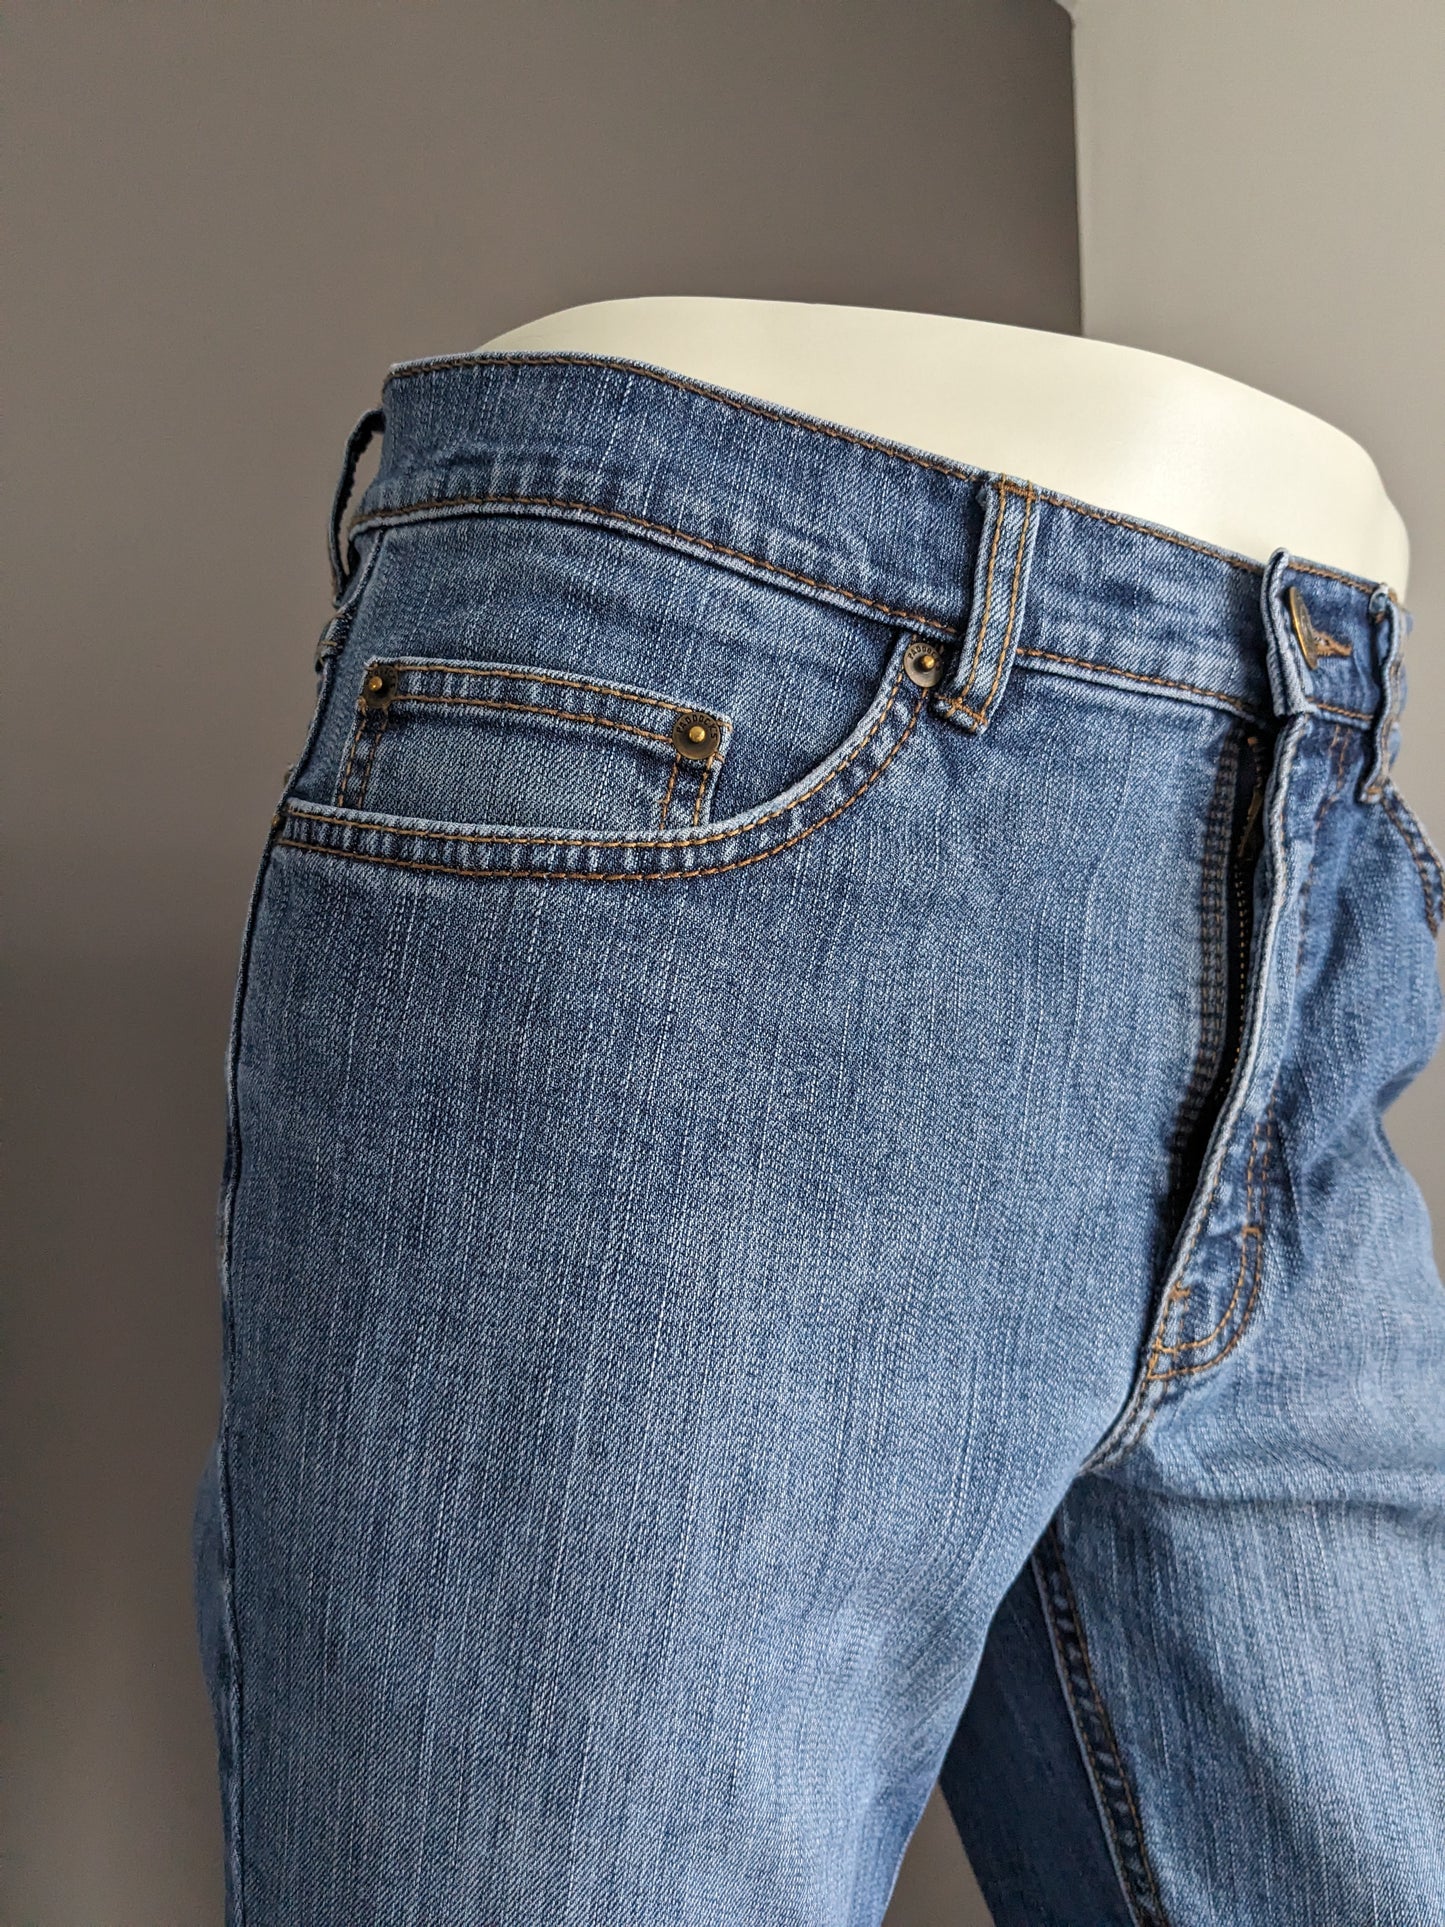 Paddocks jeans. Blauw. W33 - L30. Type ''Ranger''